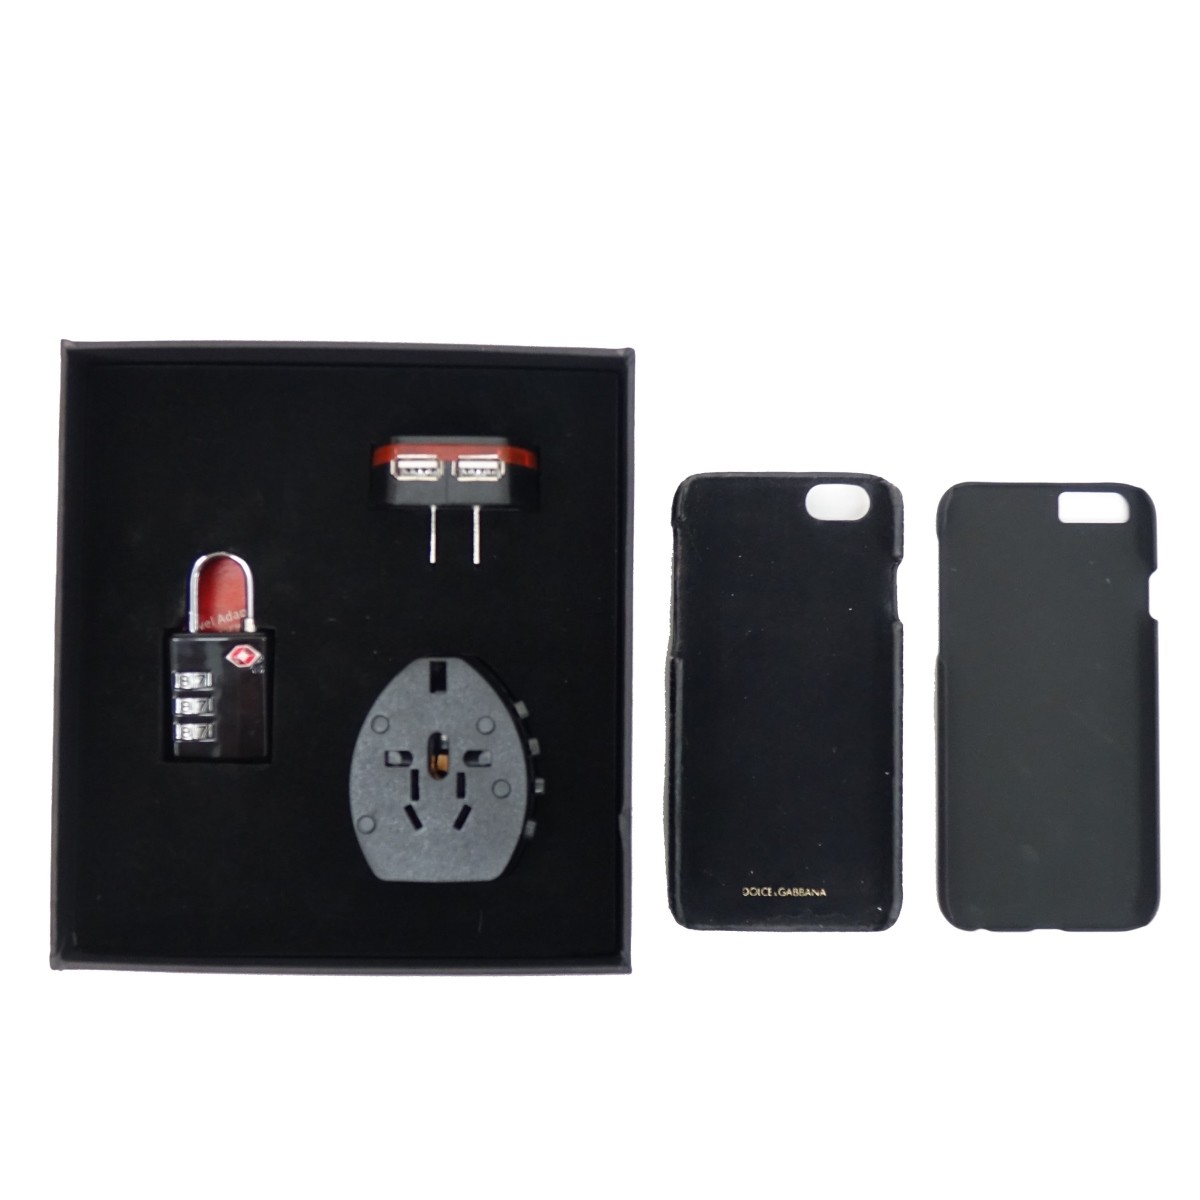 Iphone 6 Cases & Seiler Travel Adapter